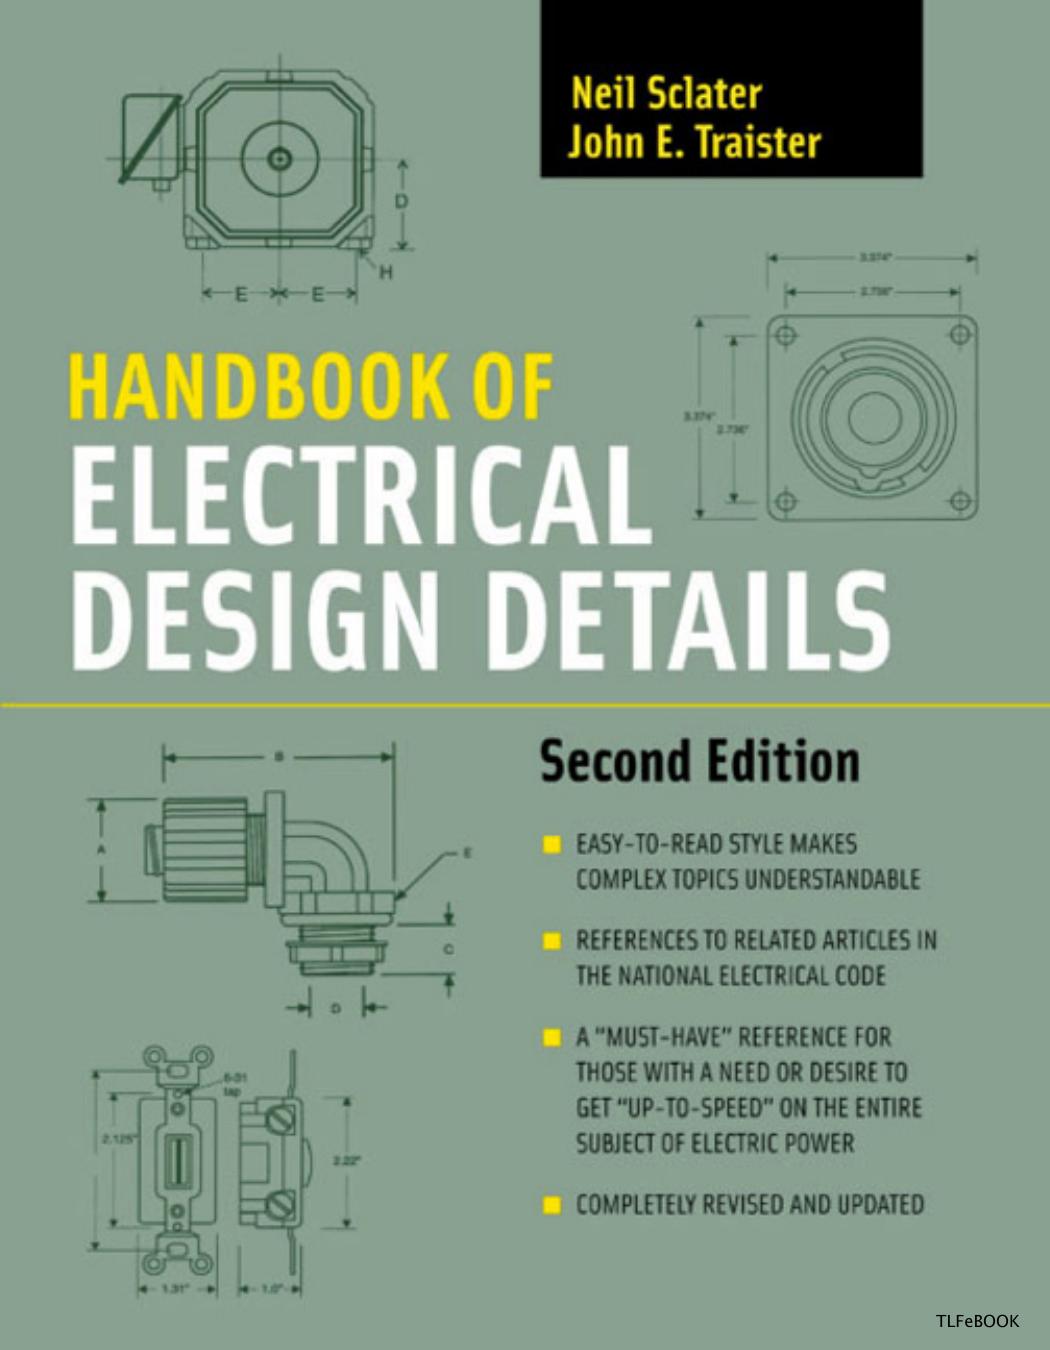 Handbook of Electrical Design Details 2nd ed. 2003.pdf